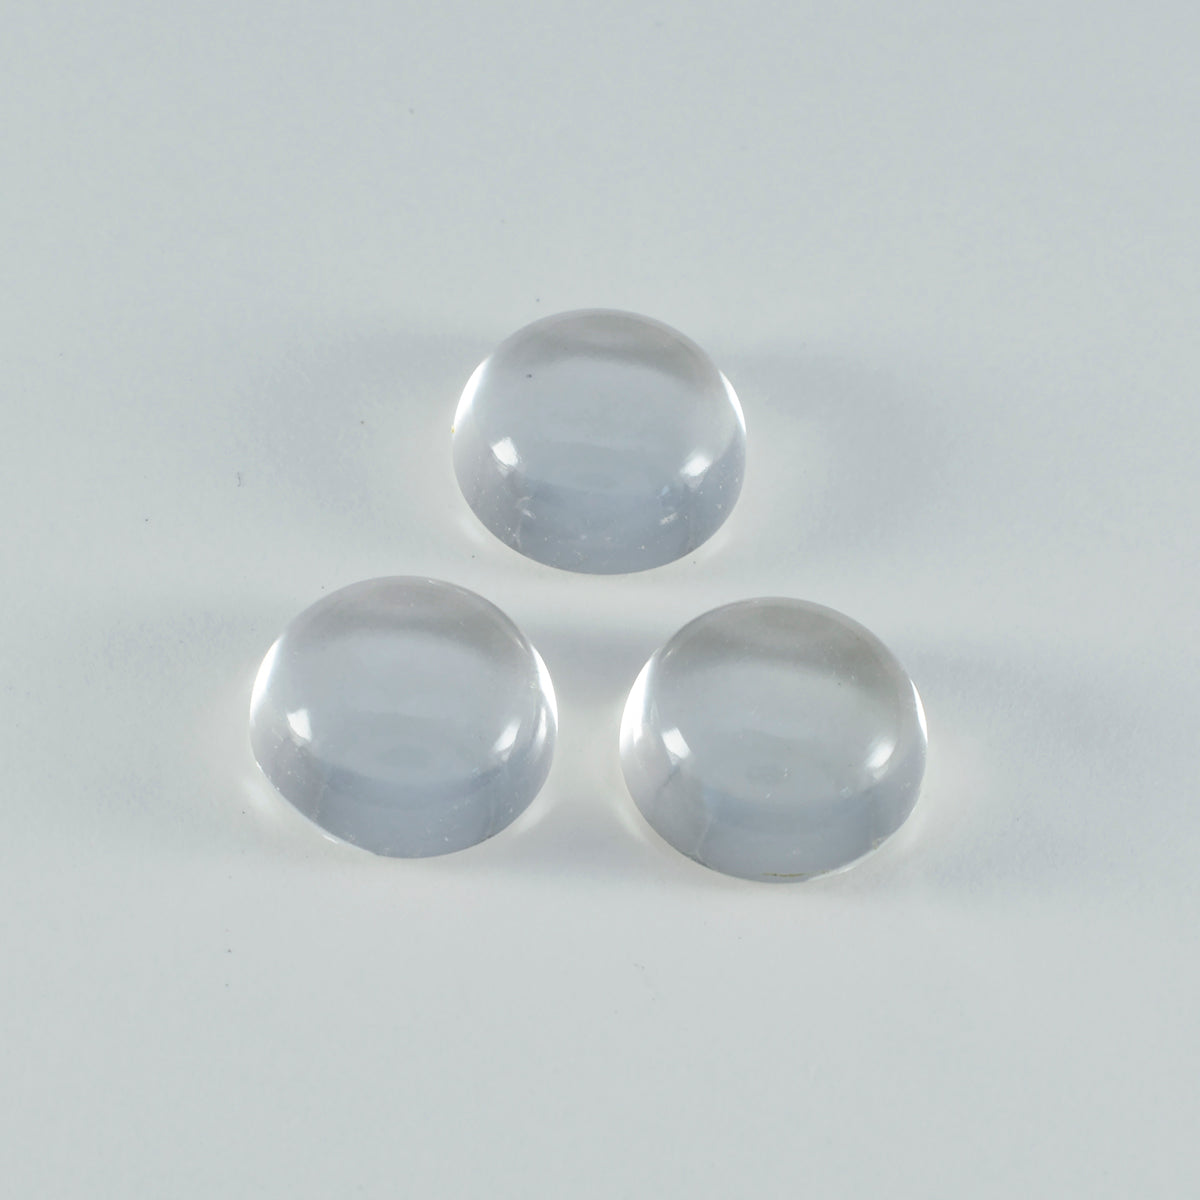 riyogems 1pc ホワイトクリスタルクォーツカボション 11x11 mm ラウンド形状美しい品質ルース宝石